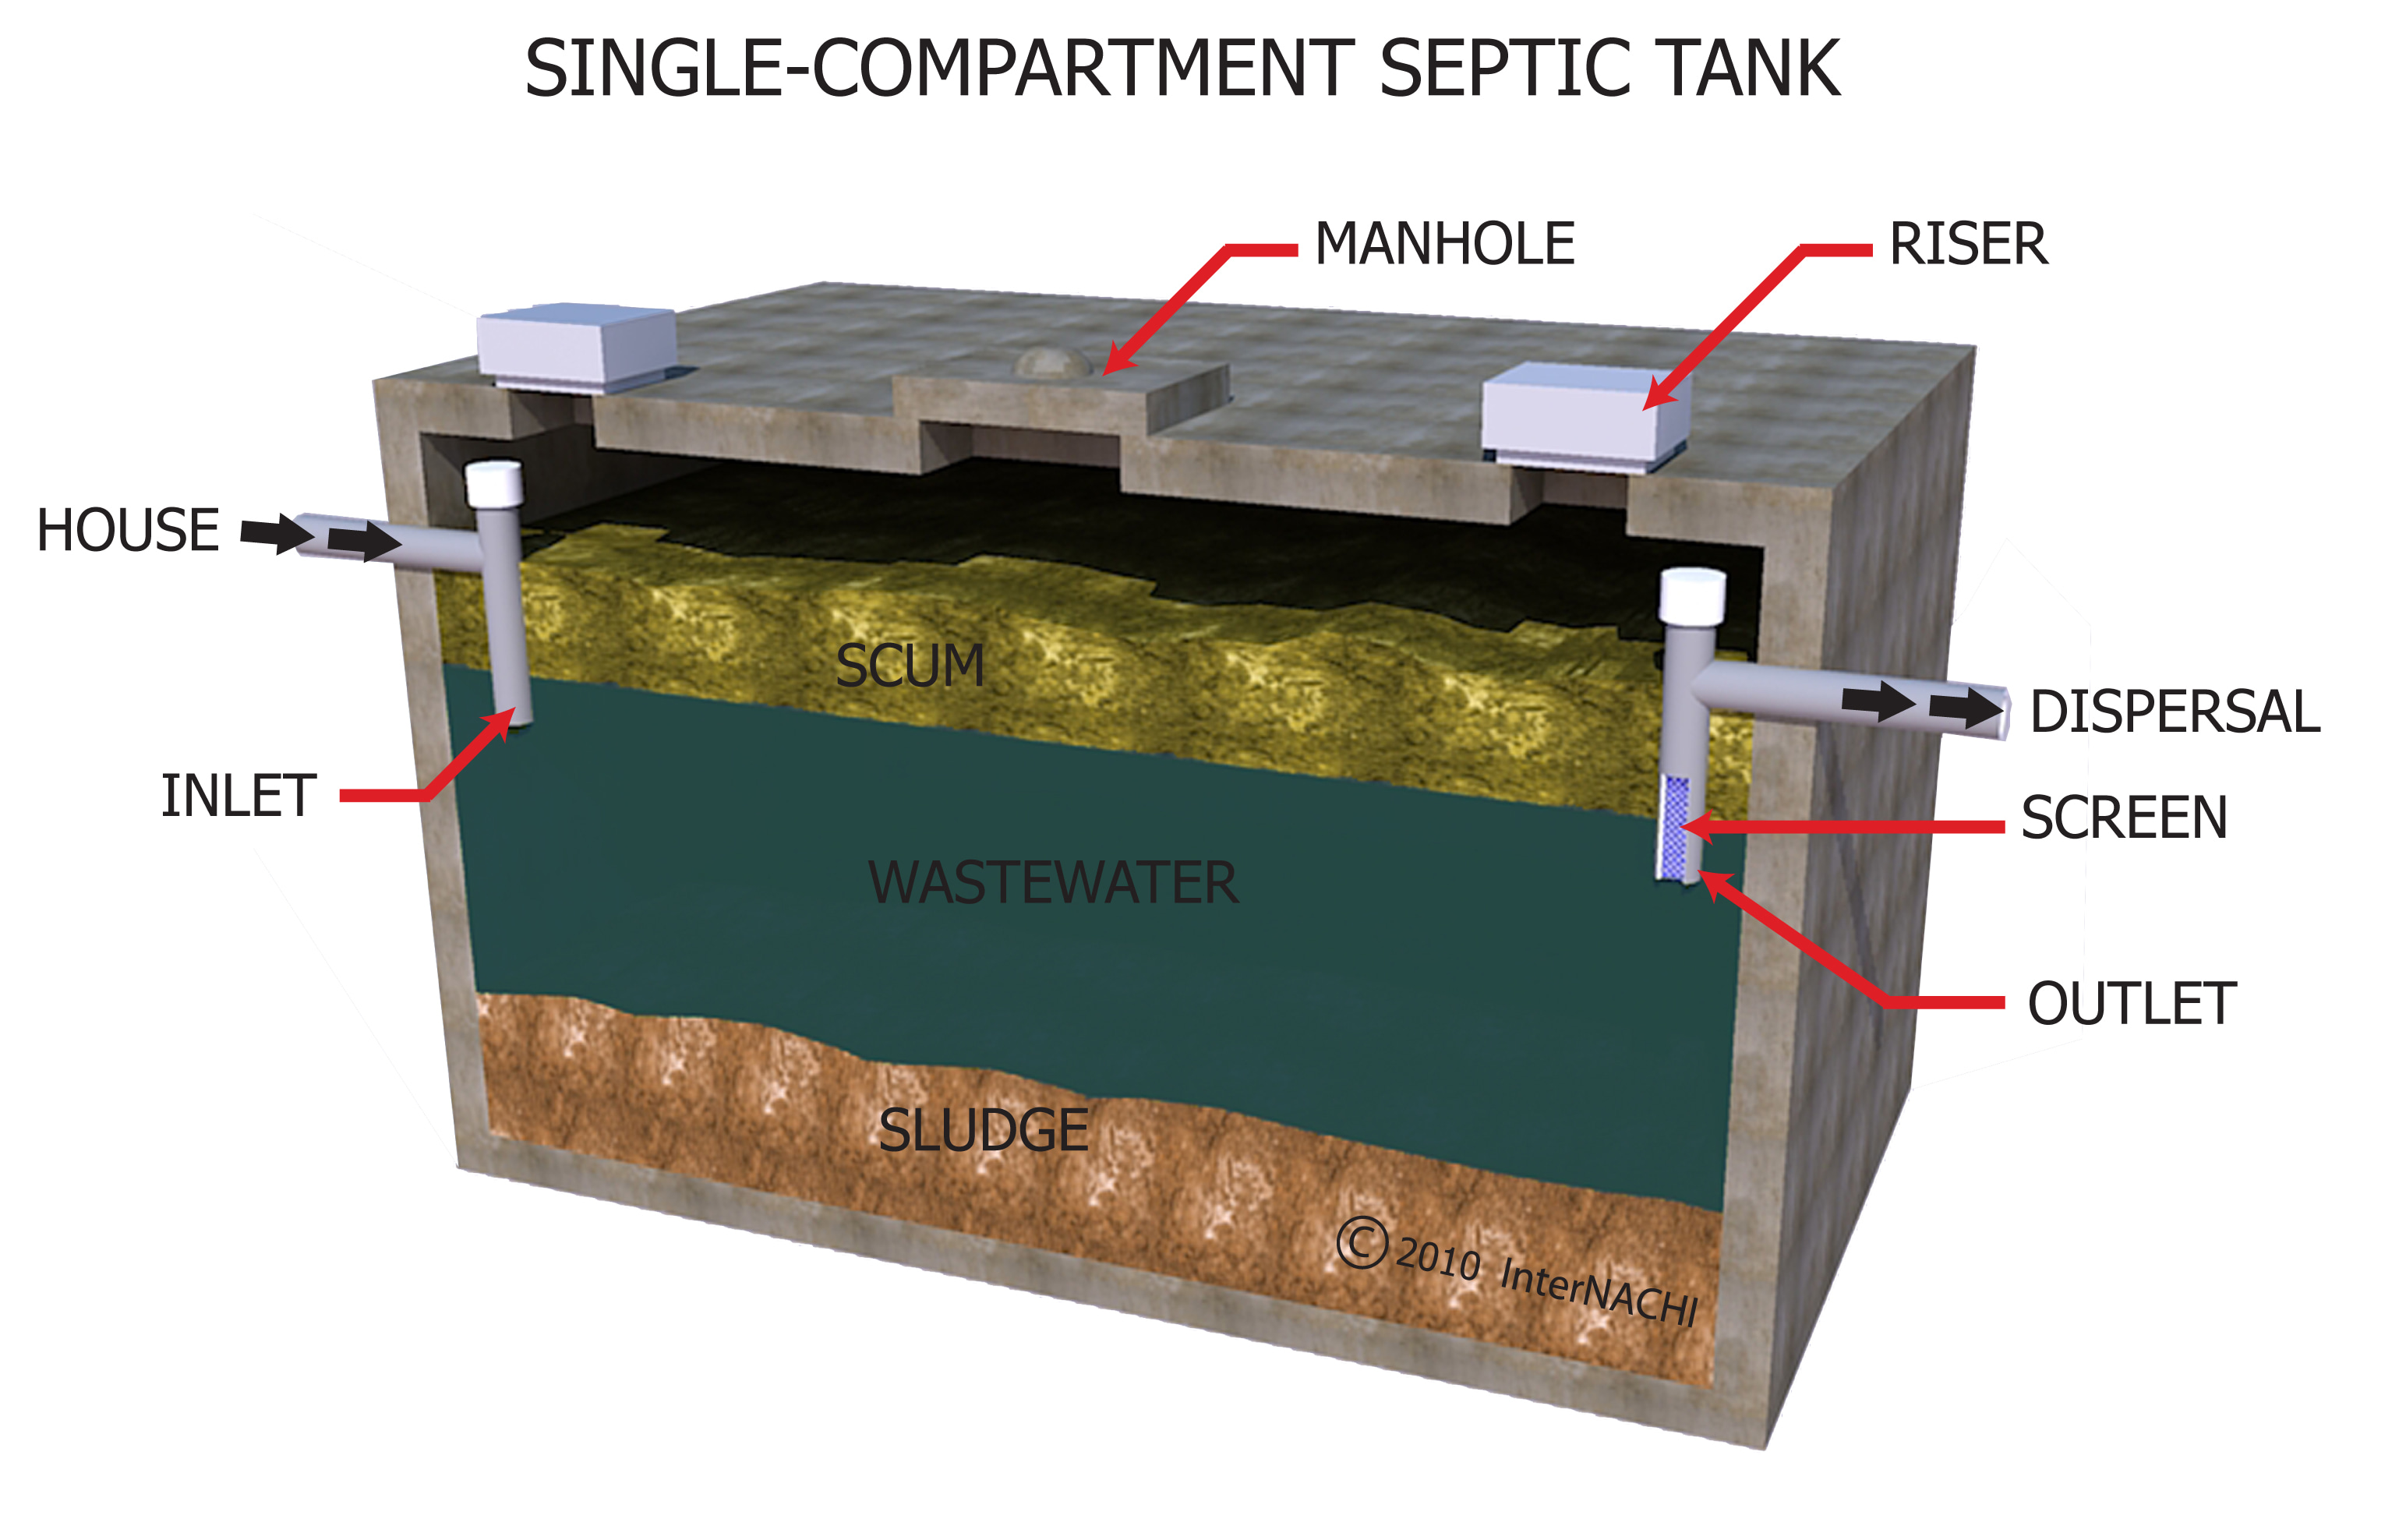 Single chamber septic tanks